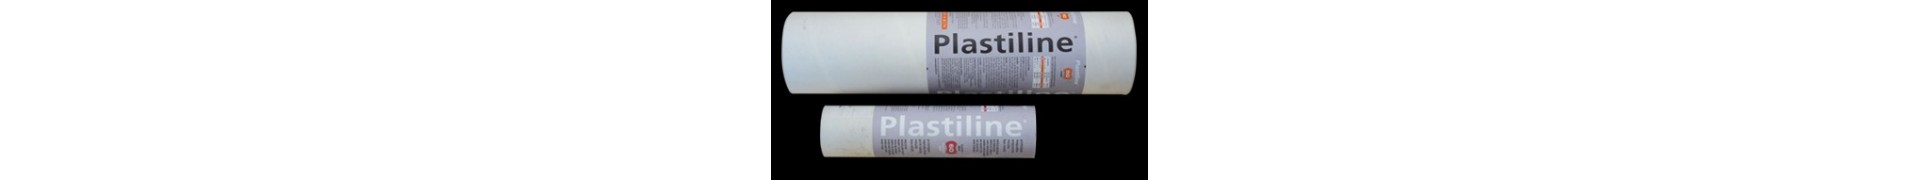 PLASTILINE HERBIN 50 1 Kg SOUPLE PLASTILINE GRISE 